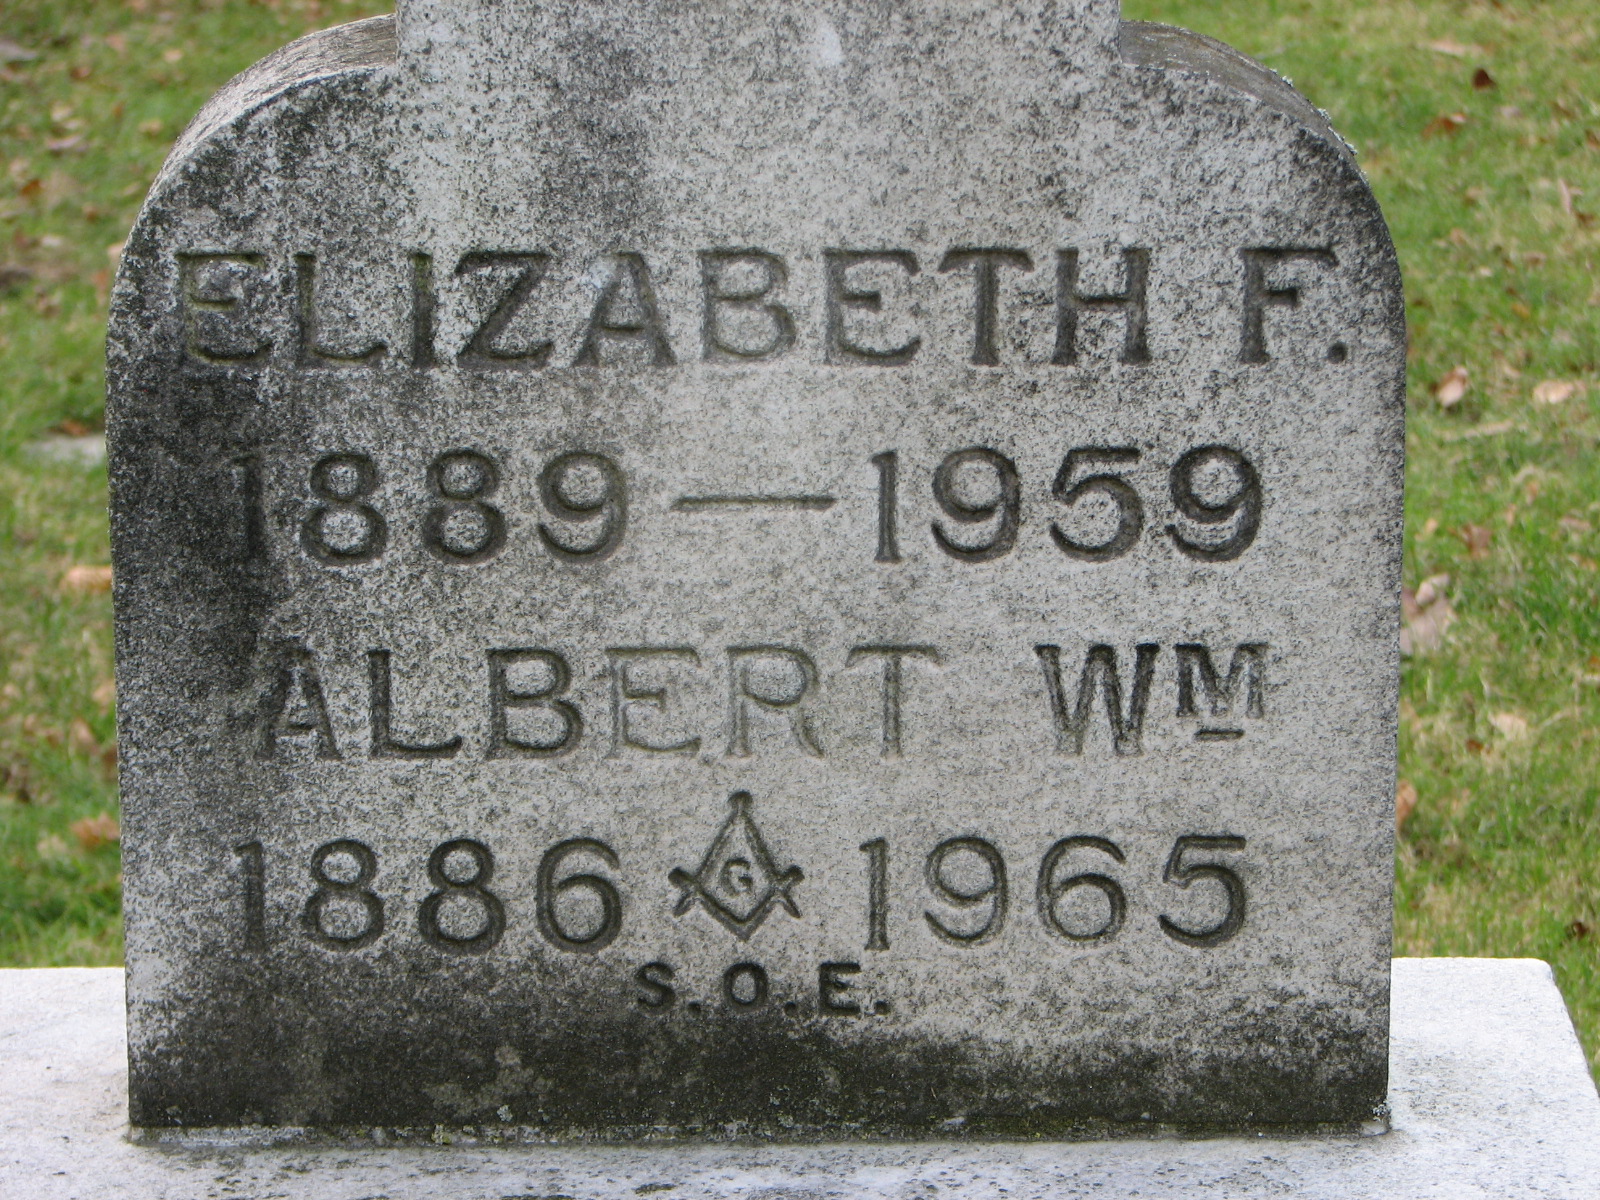 LONG-Elizabeth F. 1889-1959_Albert Wm 1886-1965